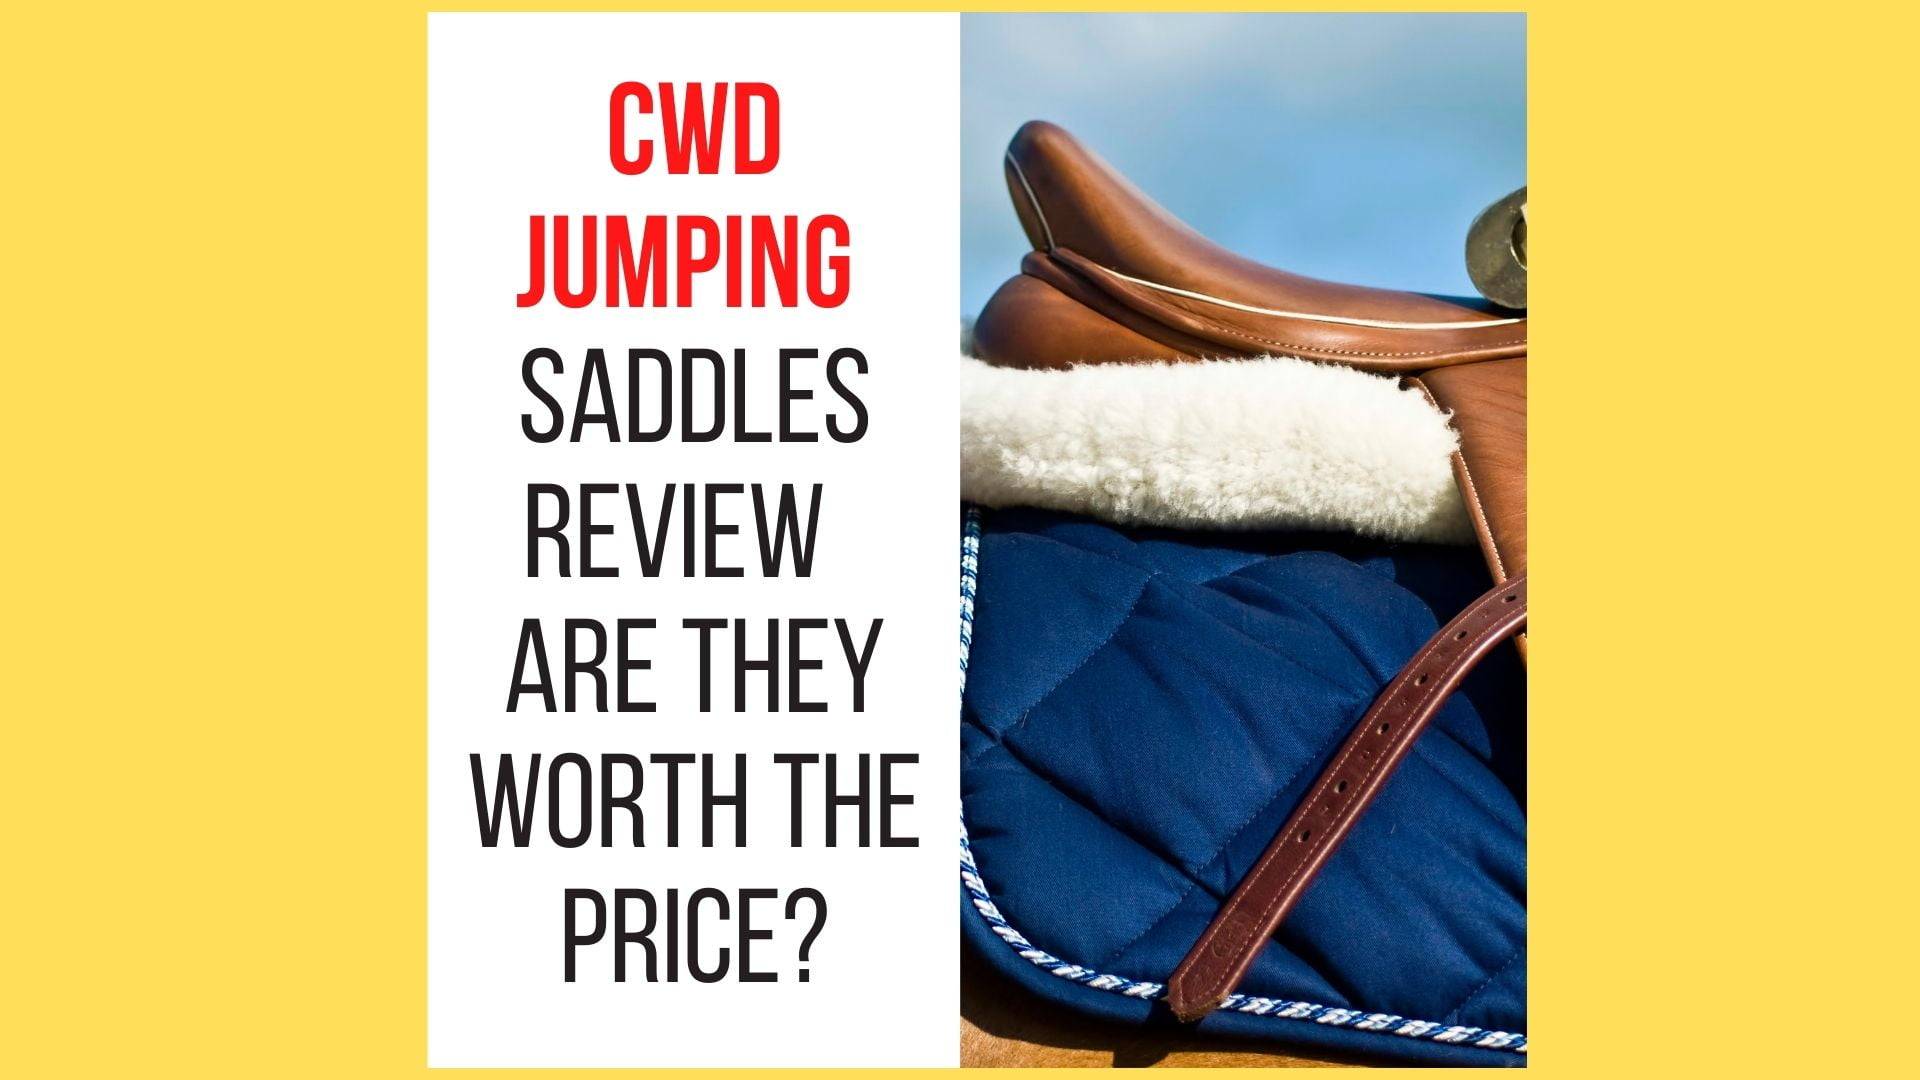 CWD Jumping Saddles Review